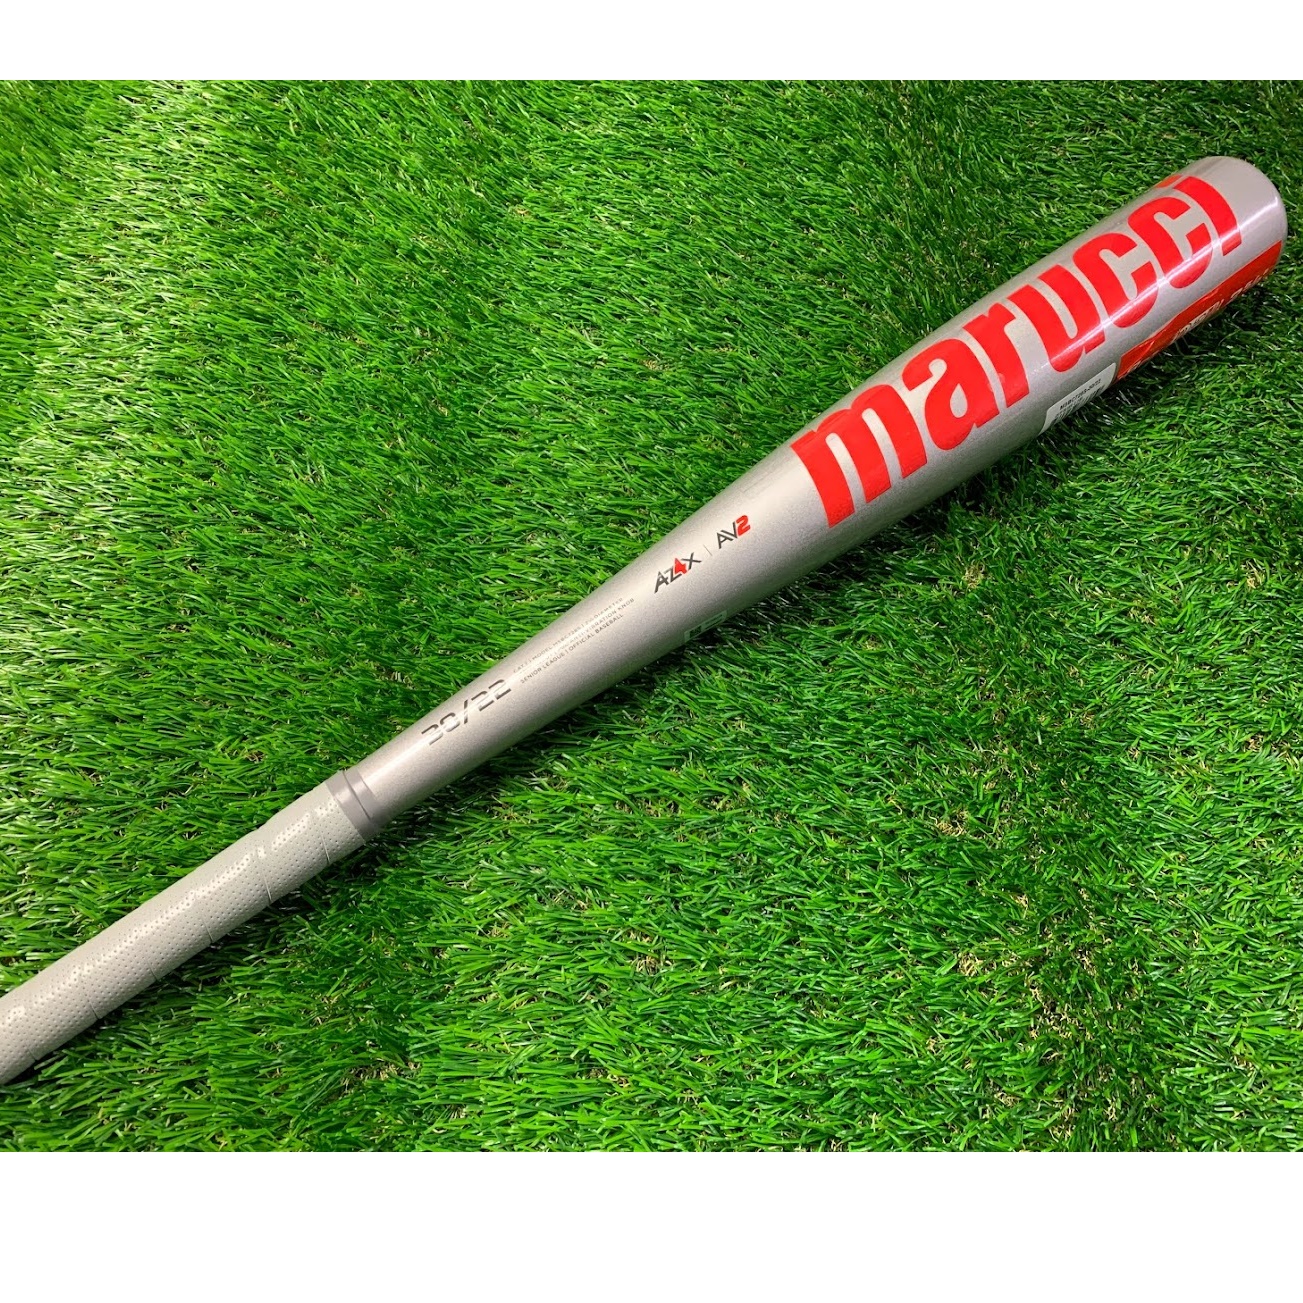 marucci-cat-7-silver-8-baseball-bat-30-incdh-22-oz-demo MSBC728S-3022-DEMO Marucci  Demo bats are a great opportunity to pick up a high